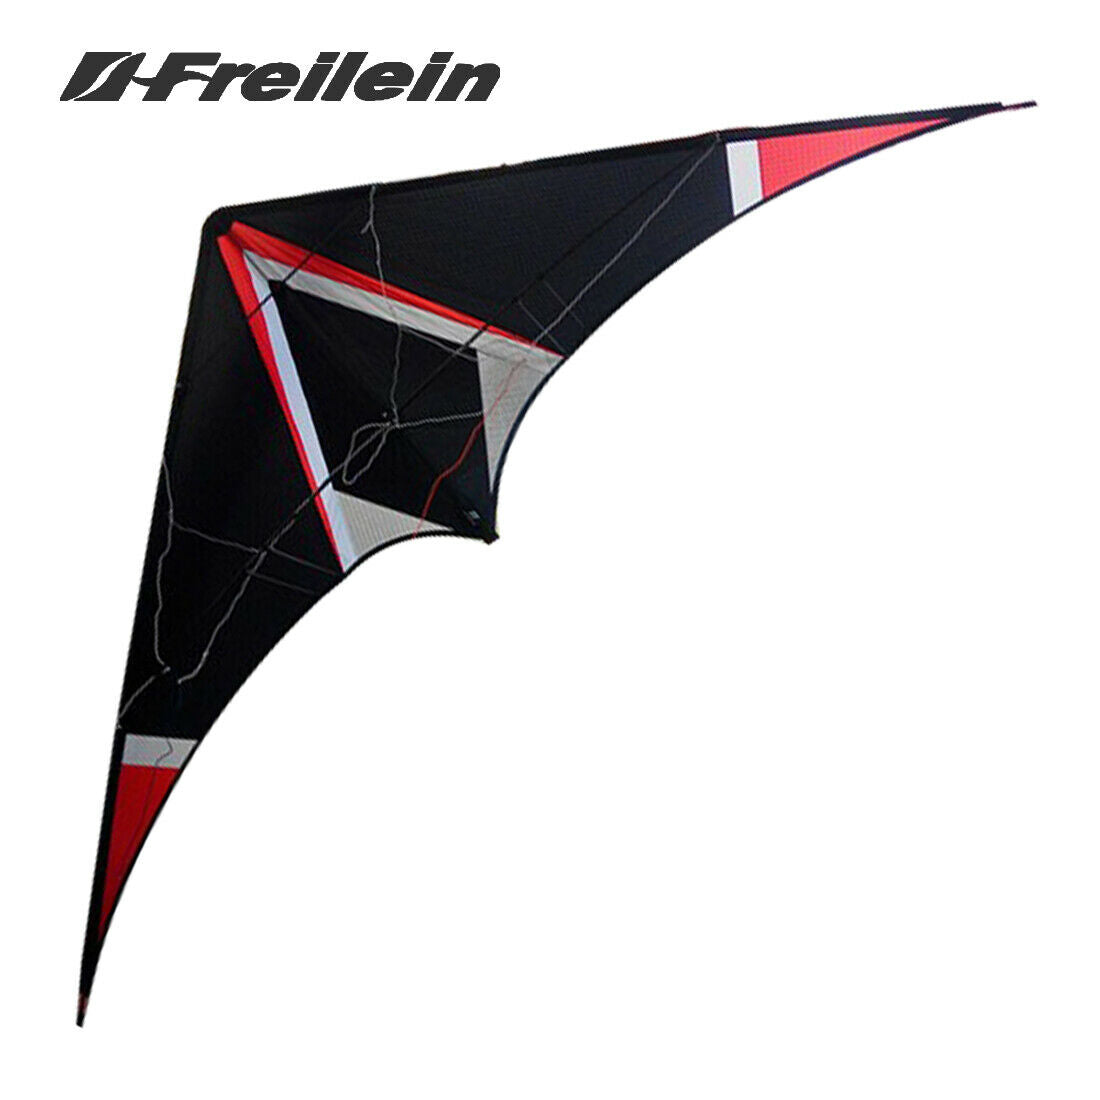 Freilein Ninja 2.36m Dual Line Stunt Kite